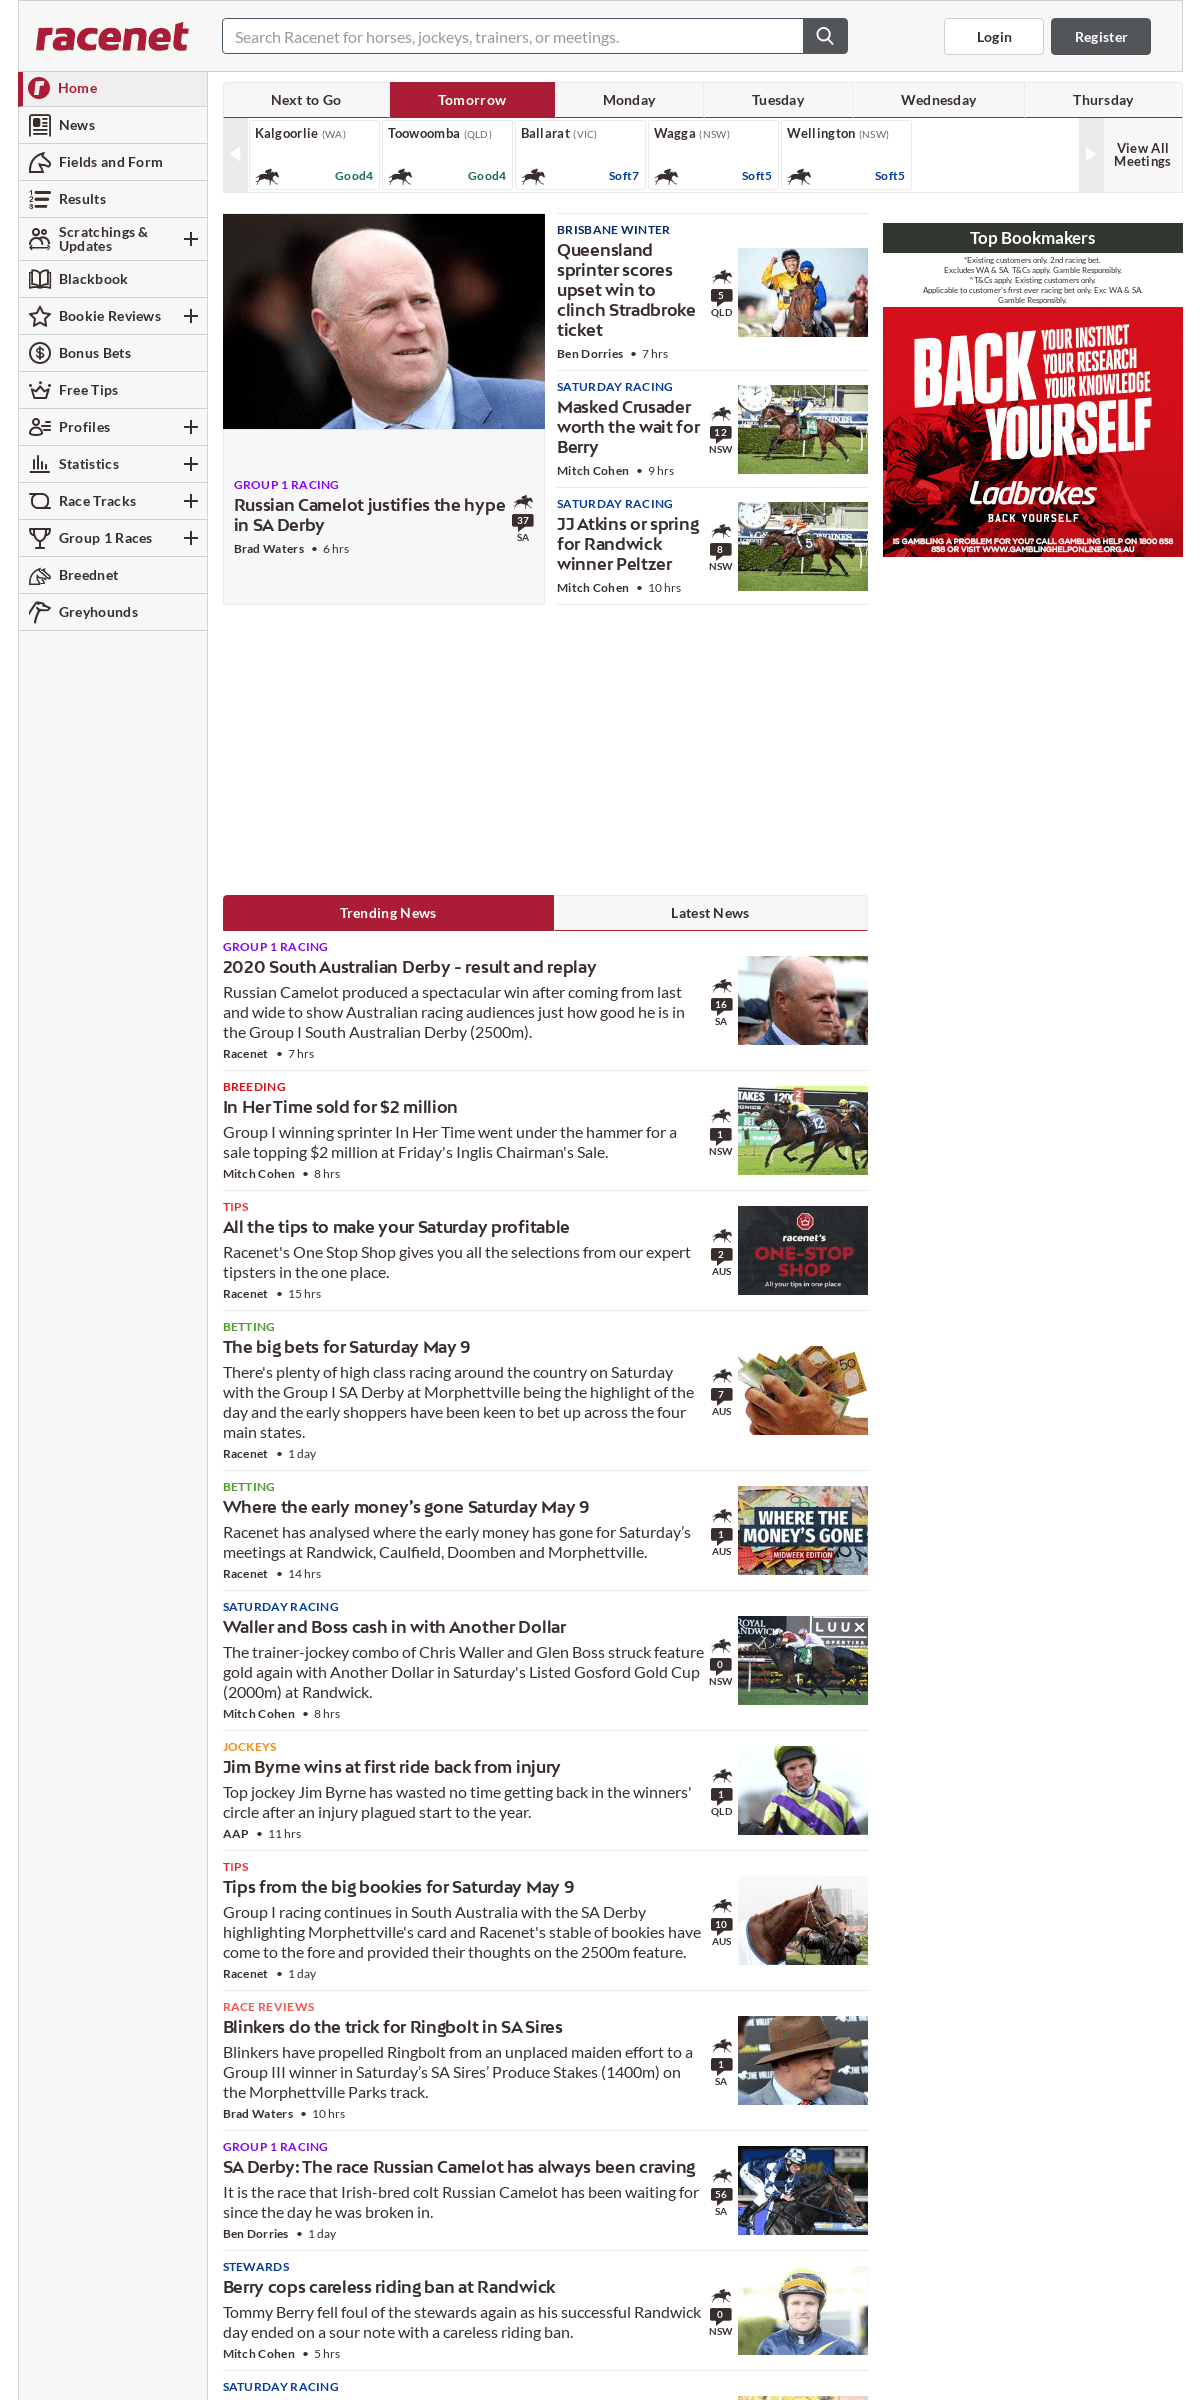 A complete backup of racenet.com.au